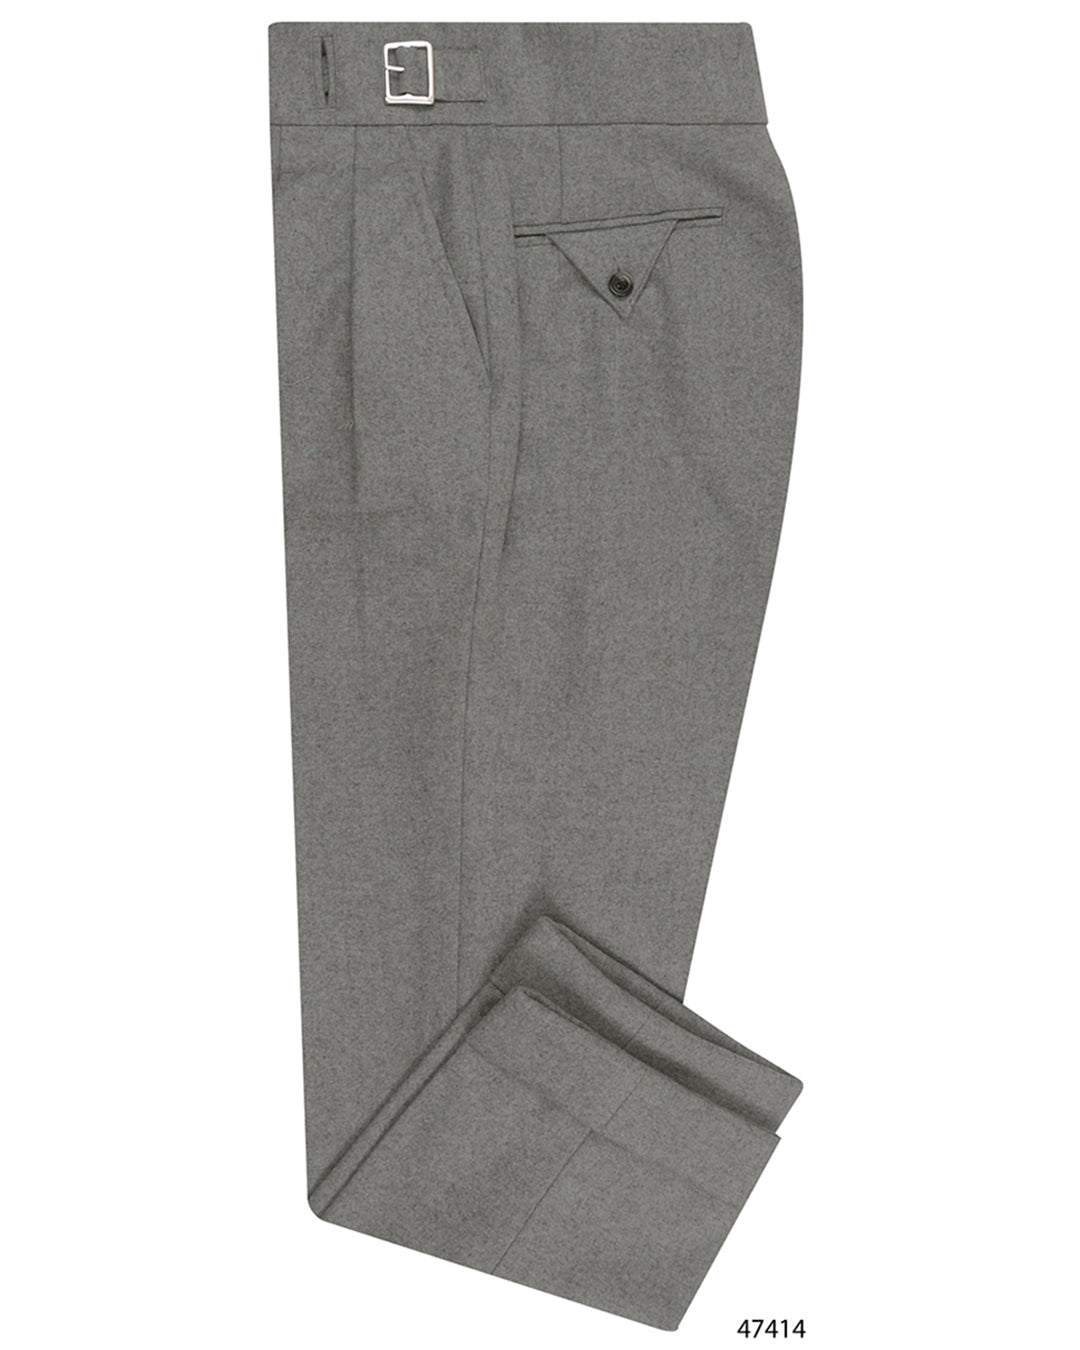 Gurkha Pant in Ethomas Wool Cashmere: Light Grey Wool